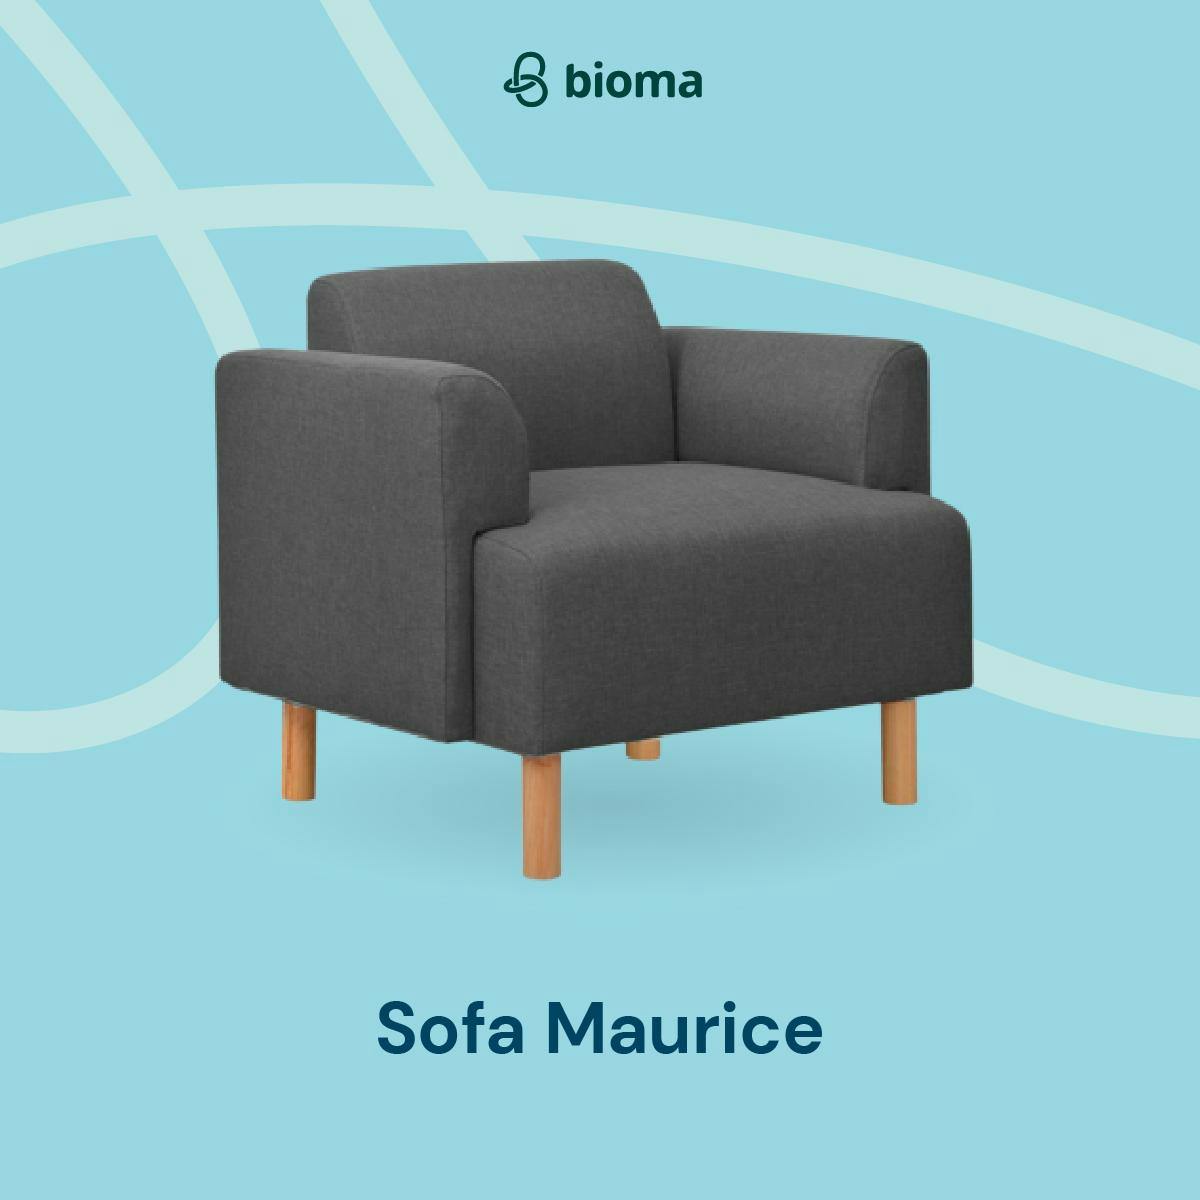 Sofa Maurice